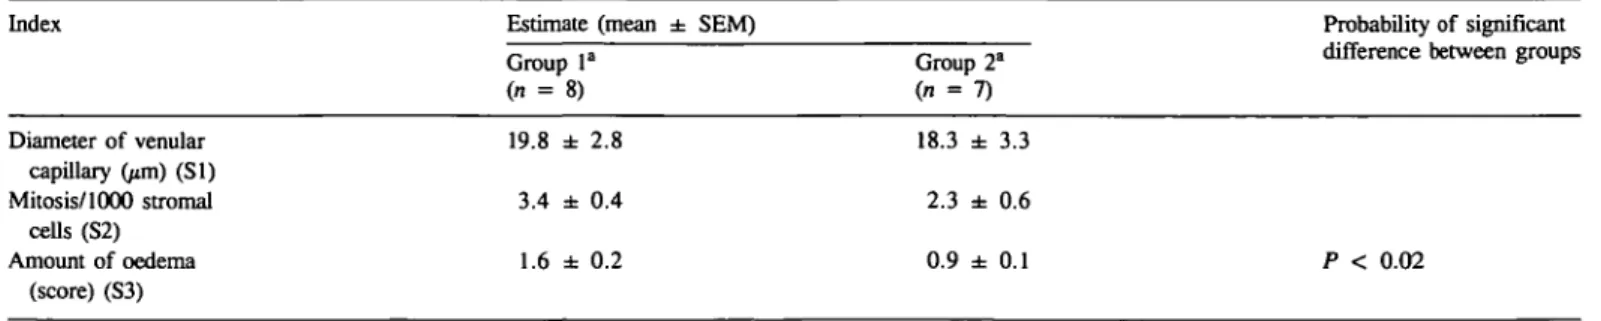 Table HI. Morphometric analysis of endometrial stroma